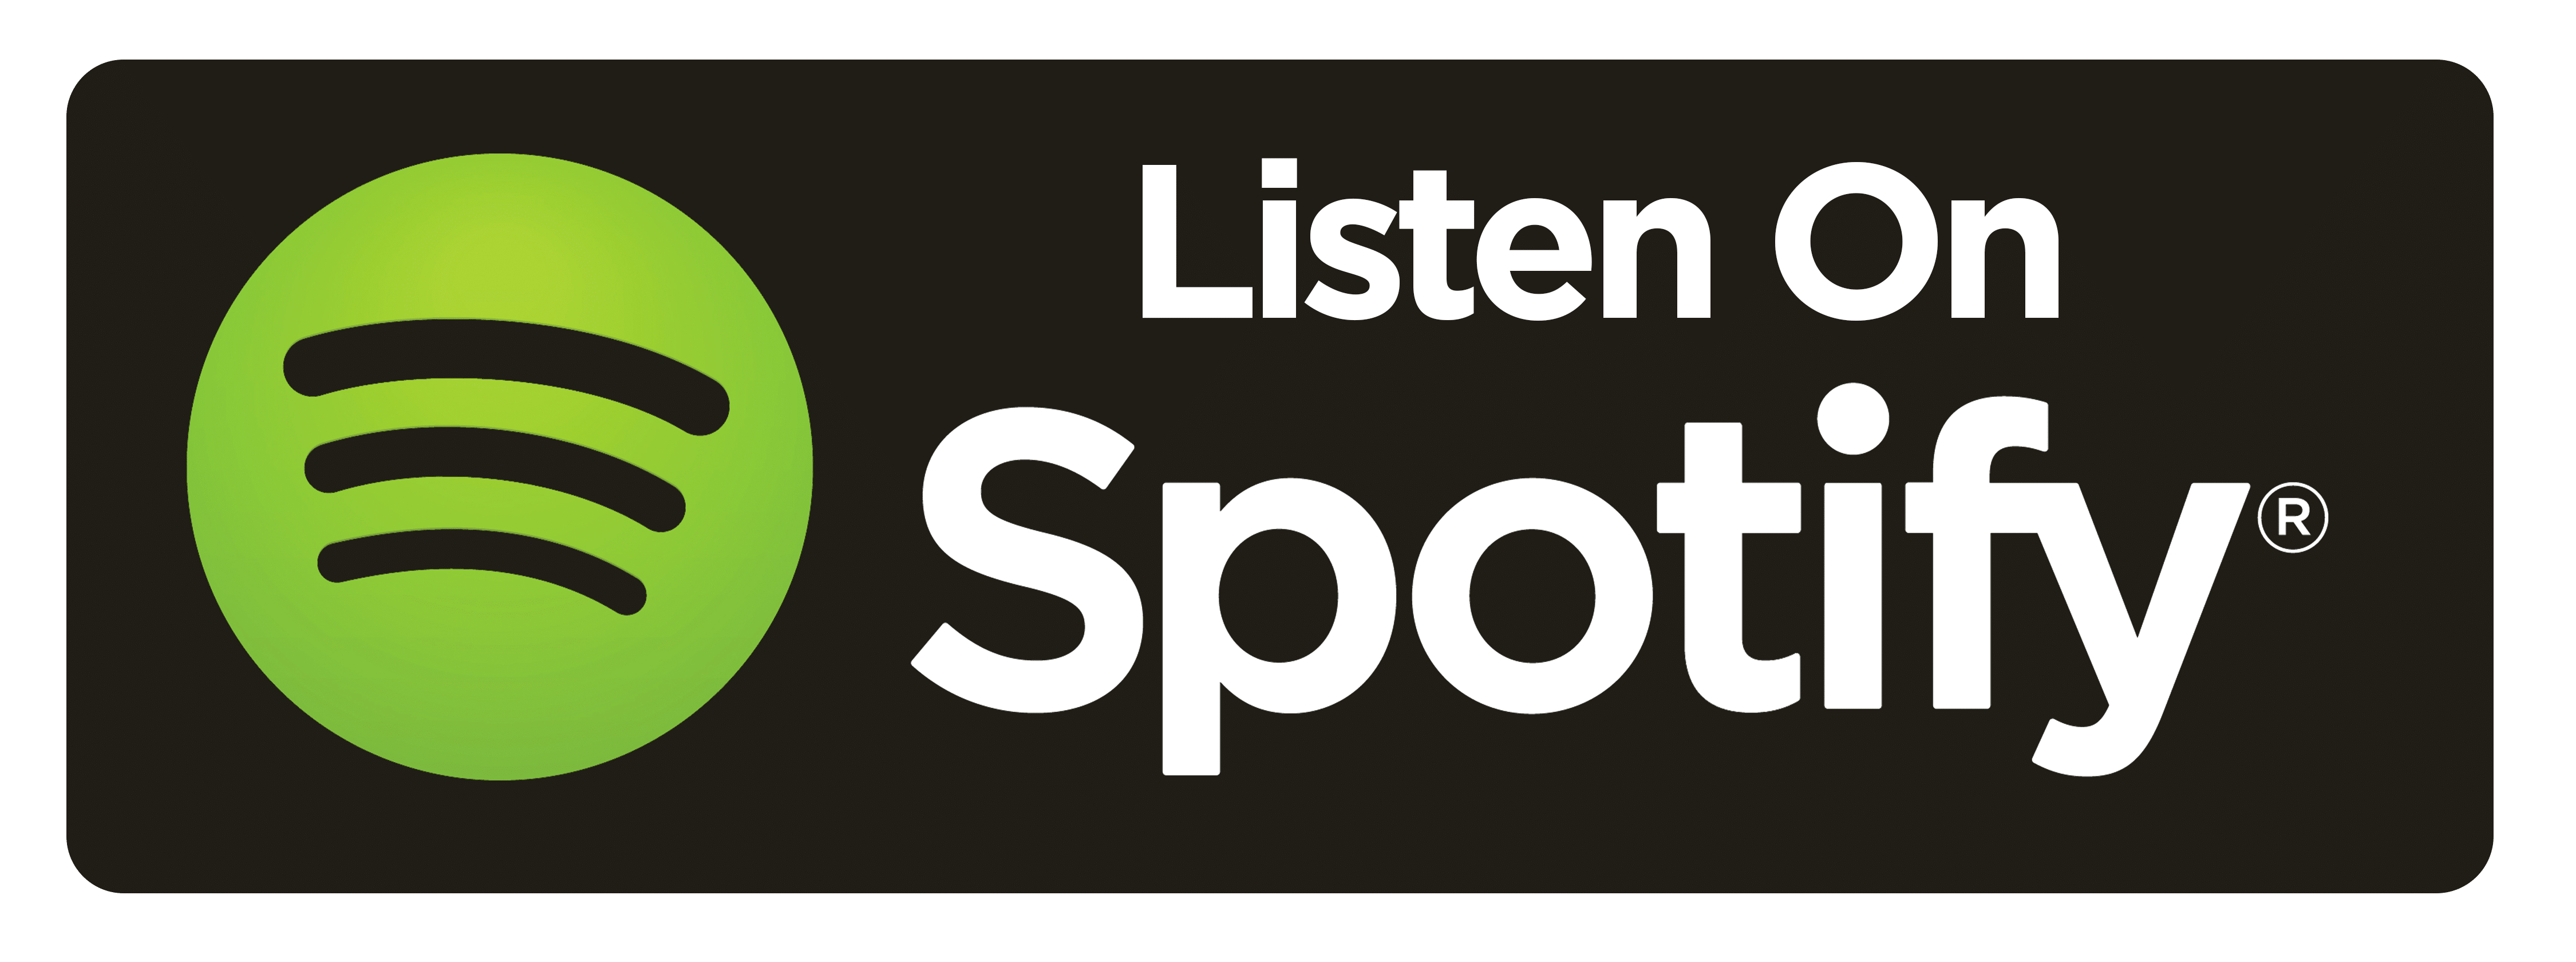 Listen-on-Spotify-badge-button - FBK